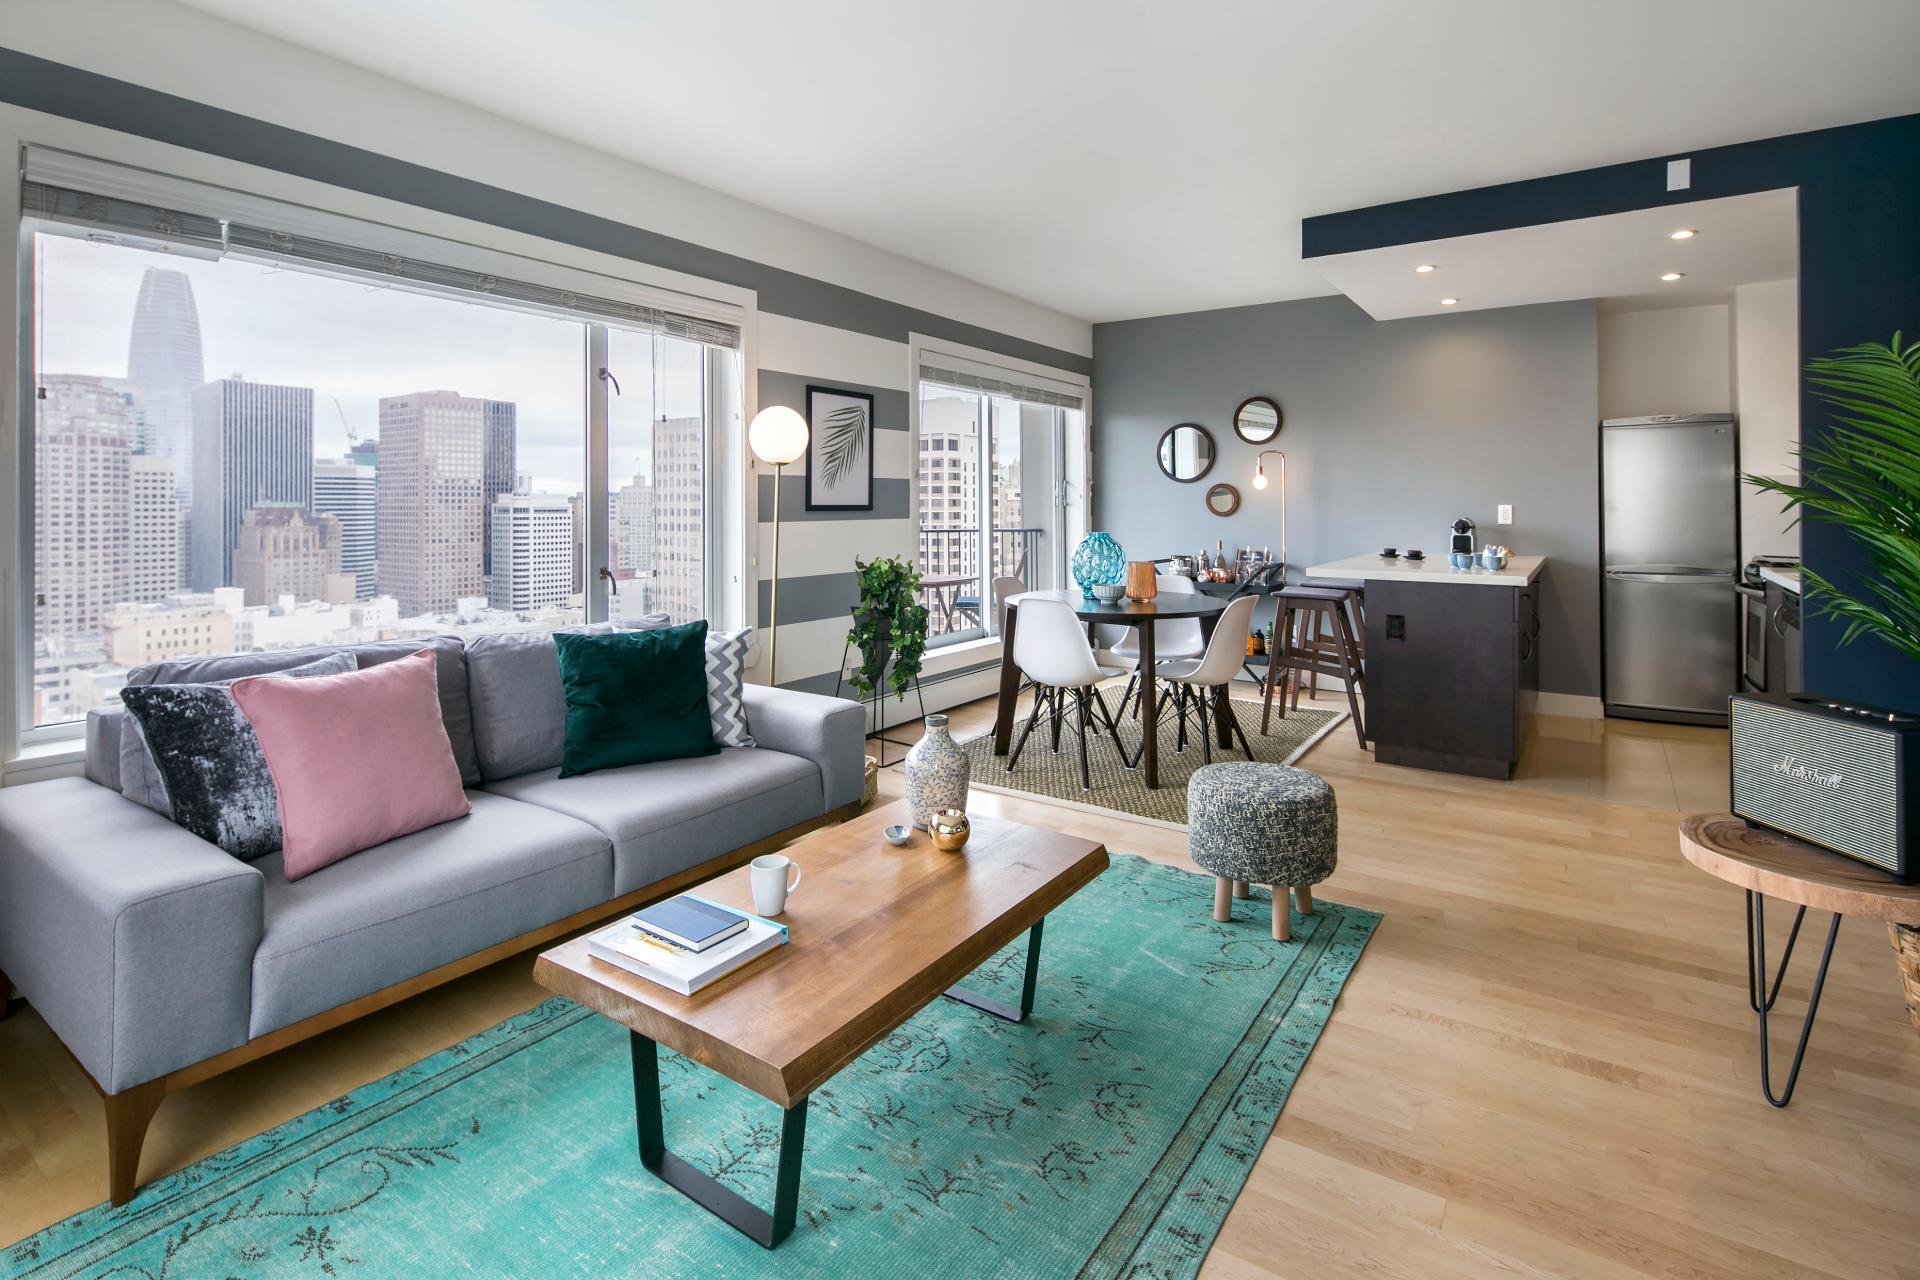 Blueground raises $20 million for flexible apartment rentals | TechCrunch